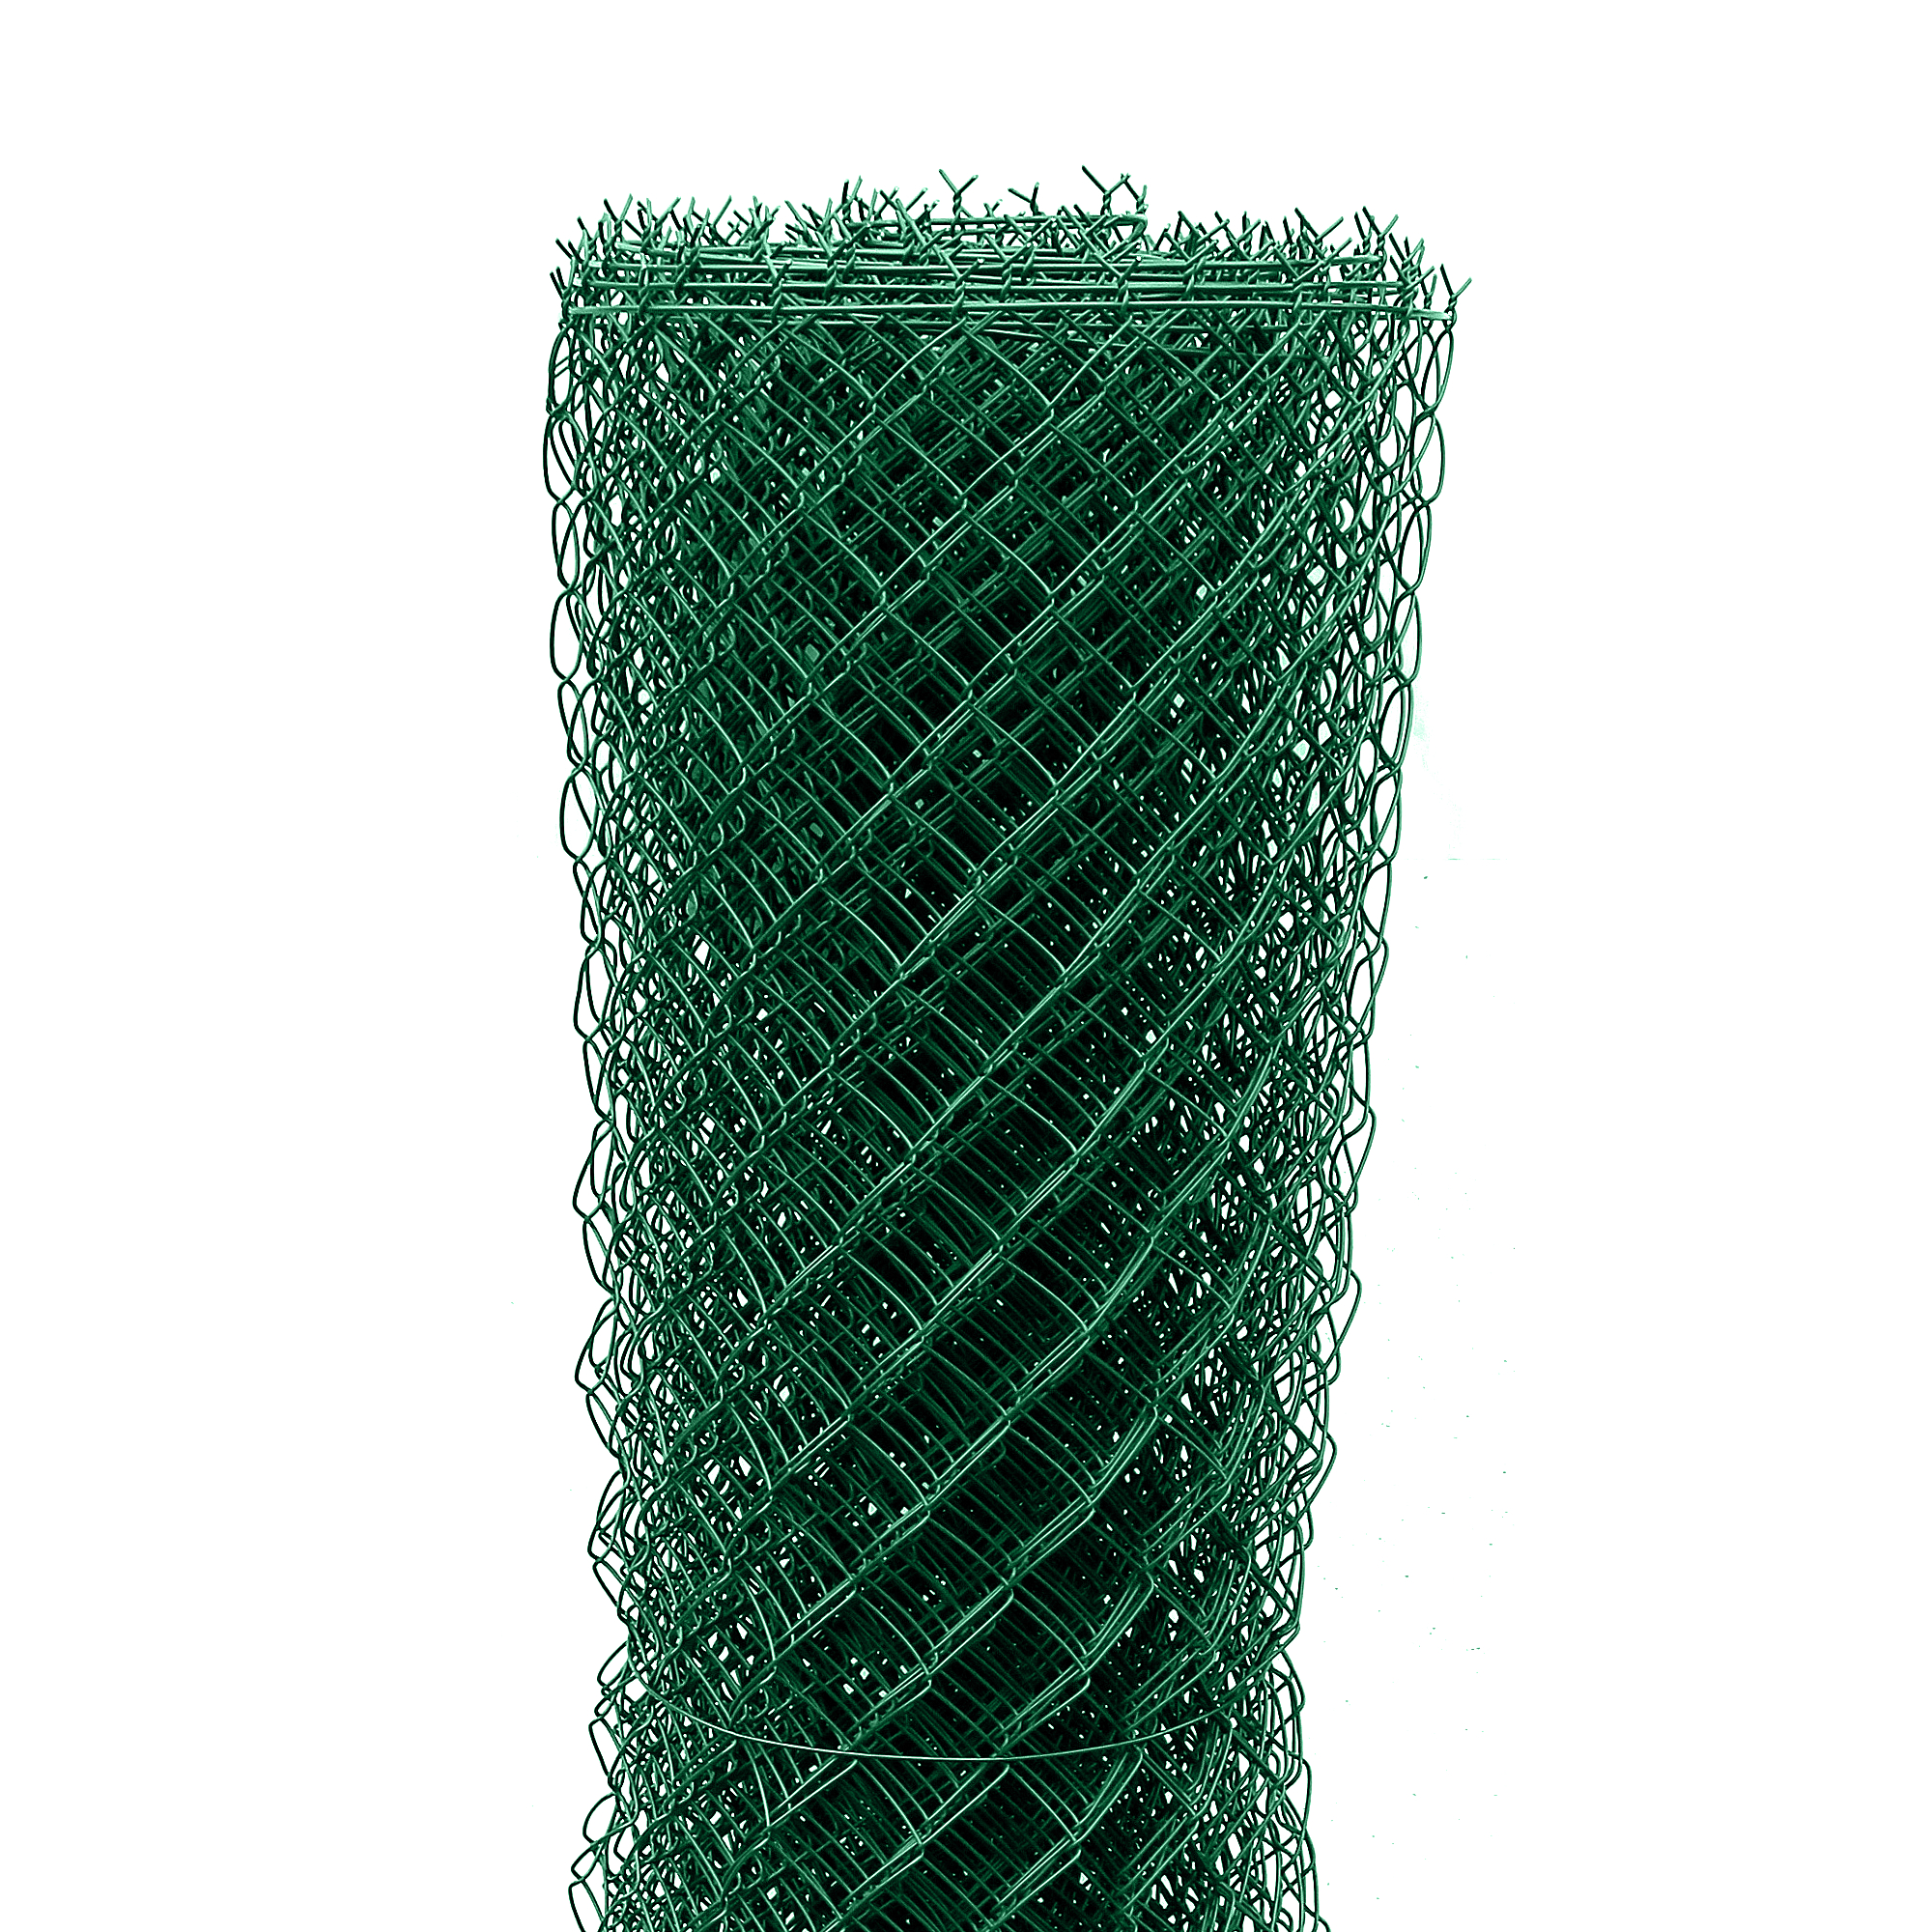 Pletivo čtyřhranné Ideal Zn + PVC Zapletené zelené výška 1,5 m 15 m/role